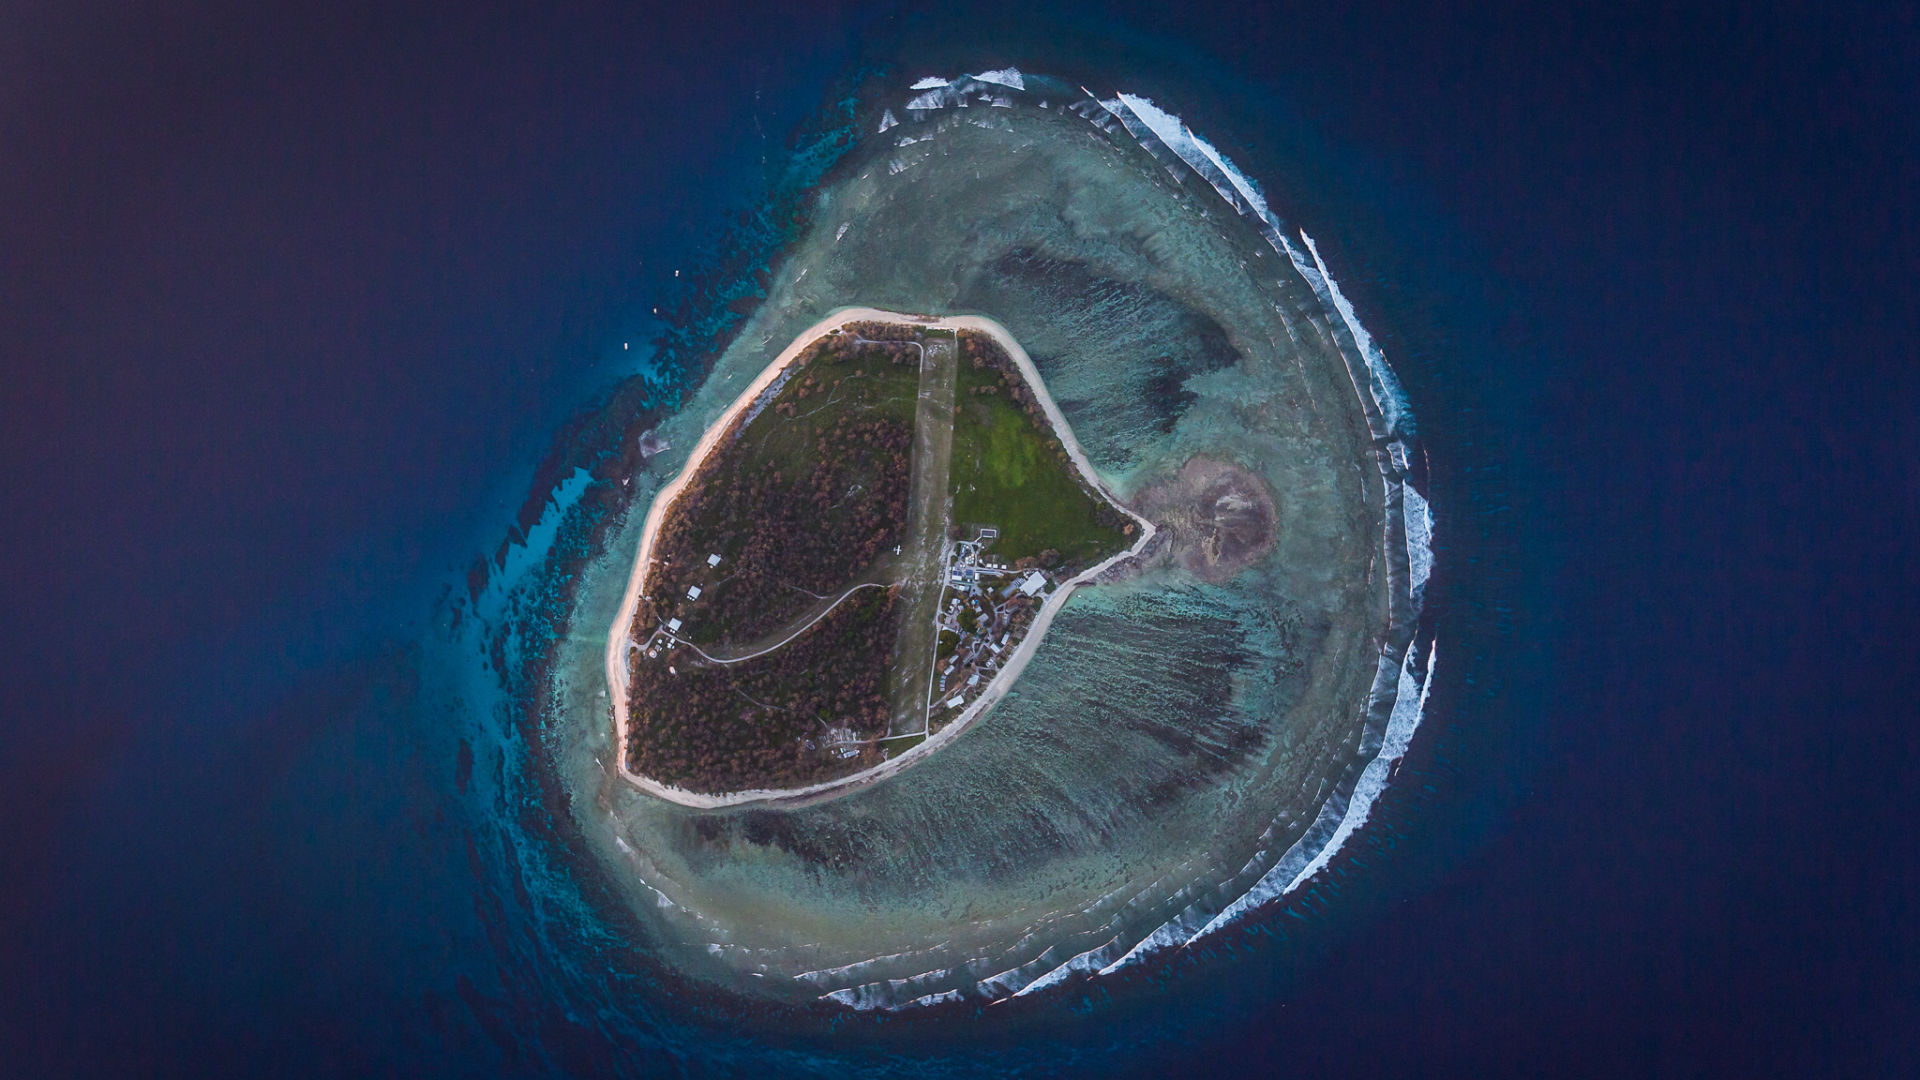 Historical photograph of Lady Elliot Island 
bare of vegetation